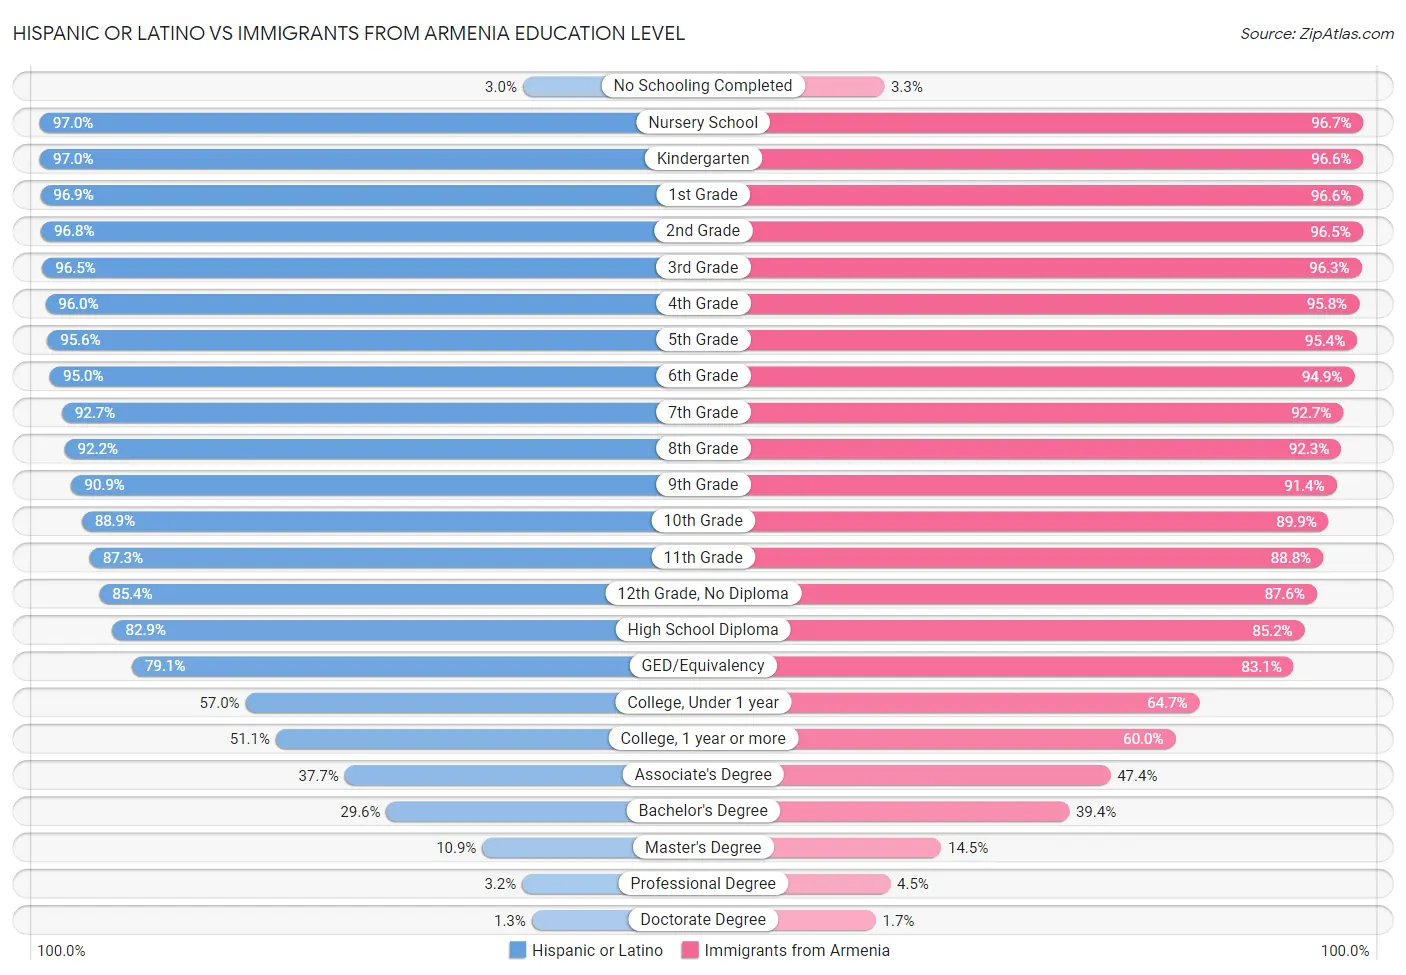 Hispanic or Latino vs Immigrants from Armenia Education Level